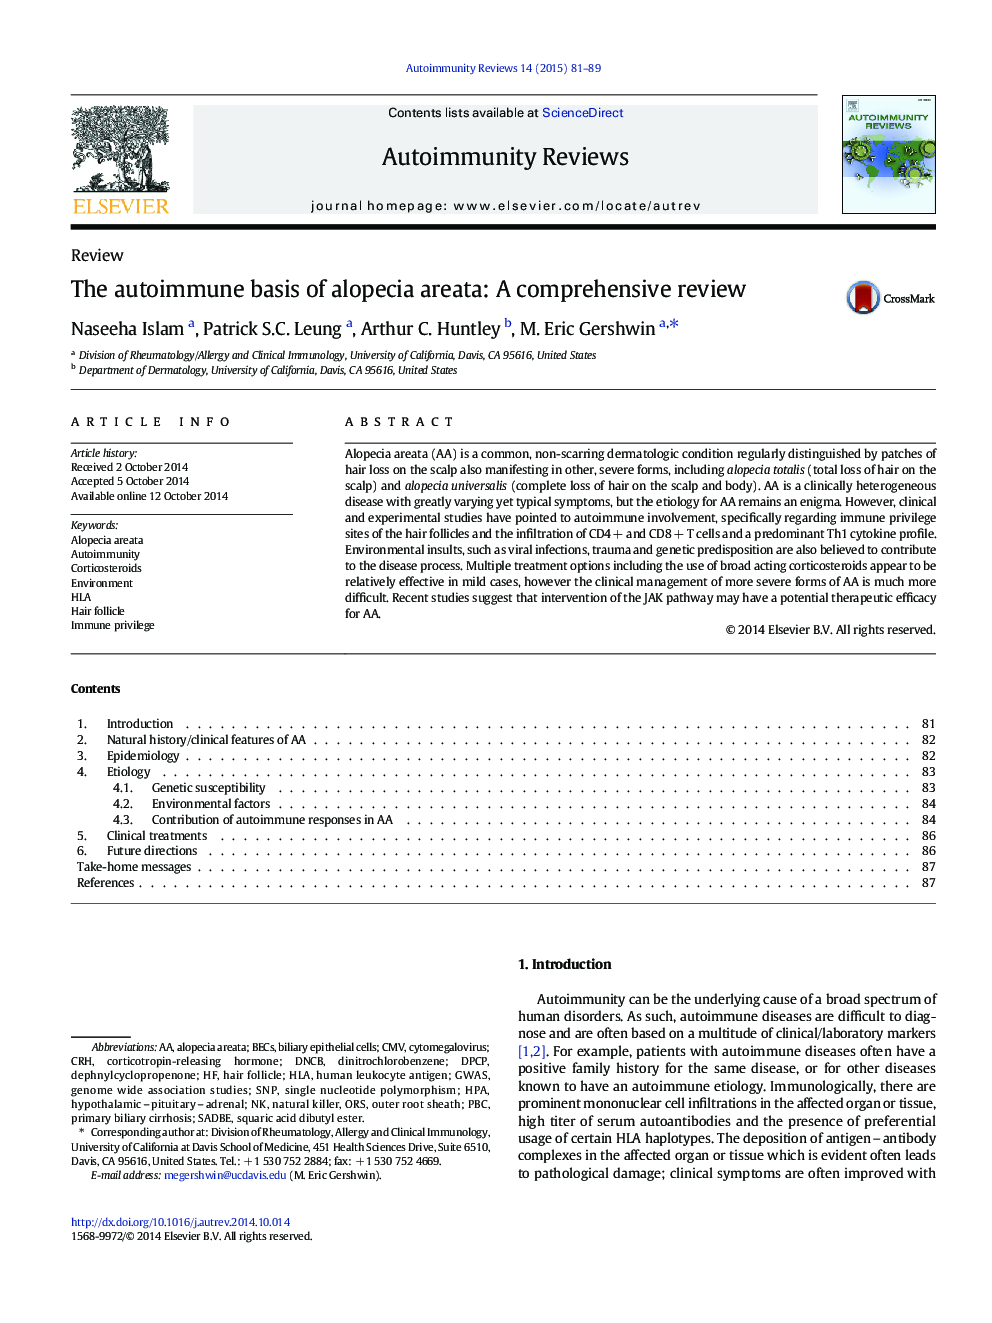 The autoimmune basis of alopecia areata: A comprehensive review